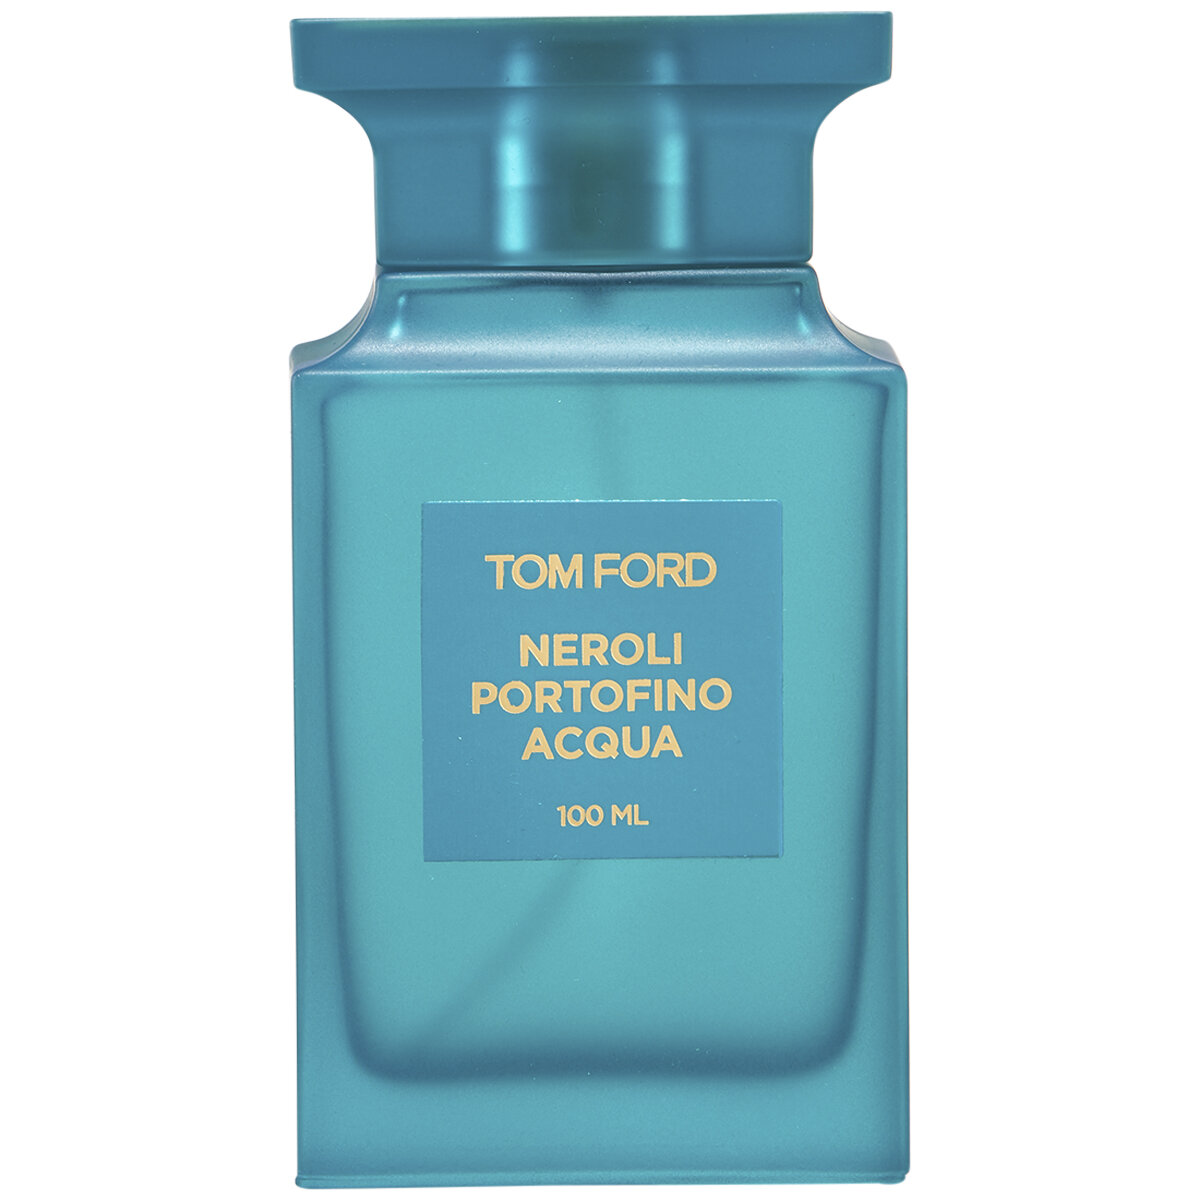 Tom Ford Neroli Portofino Acqua Eau de Toilette 100ml | C...